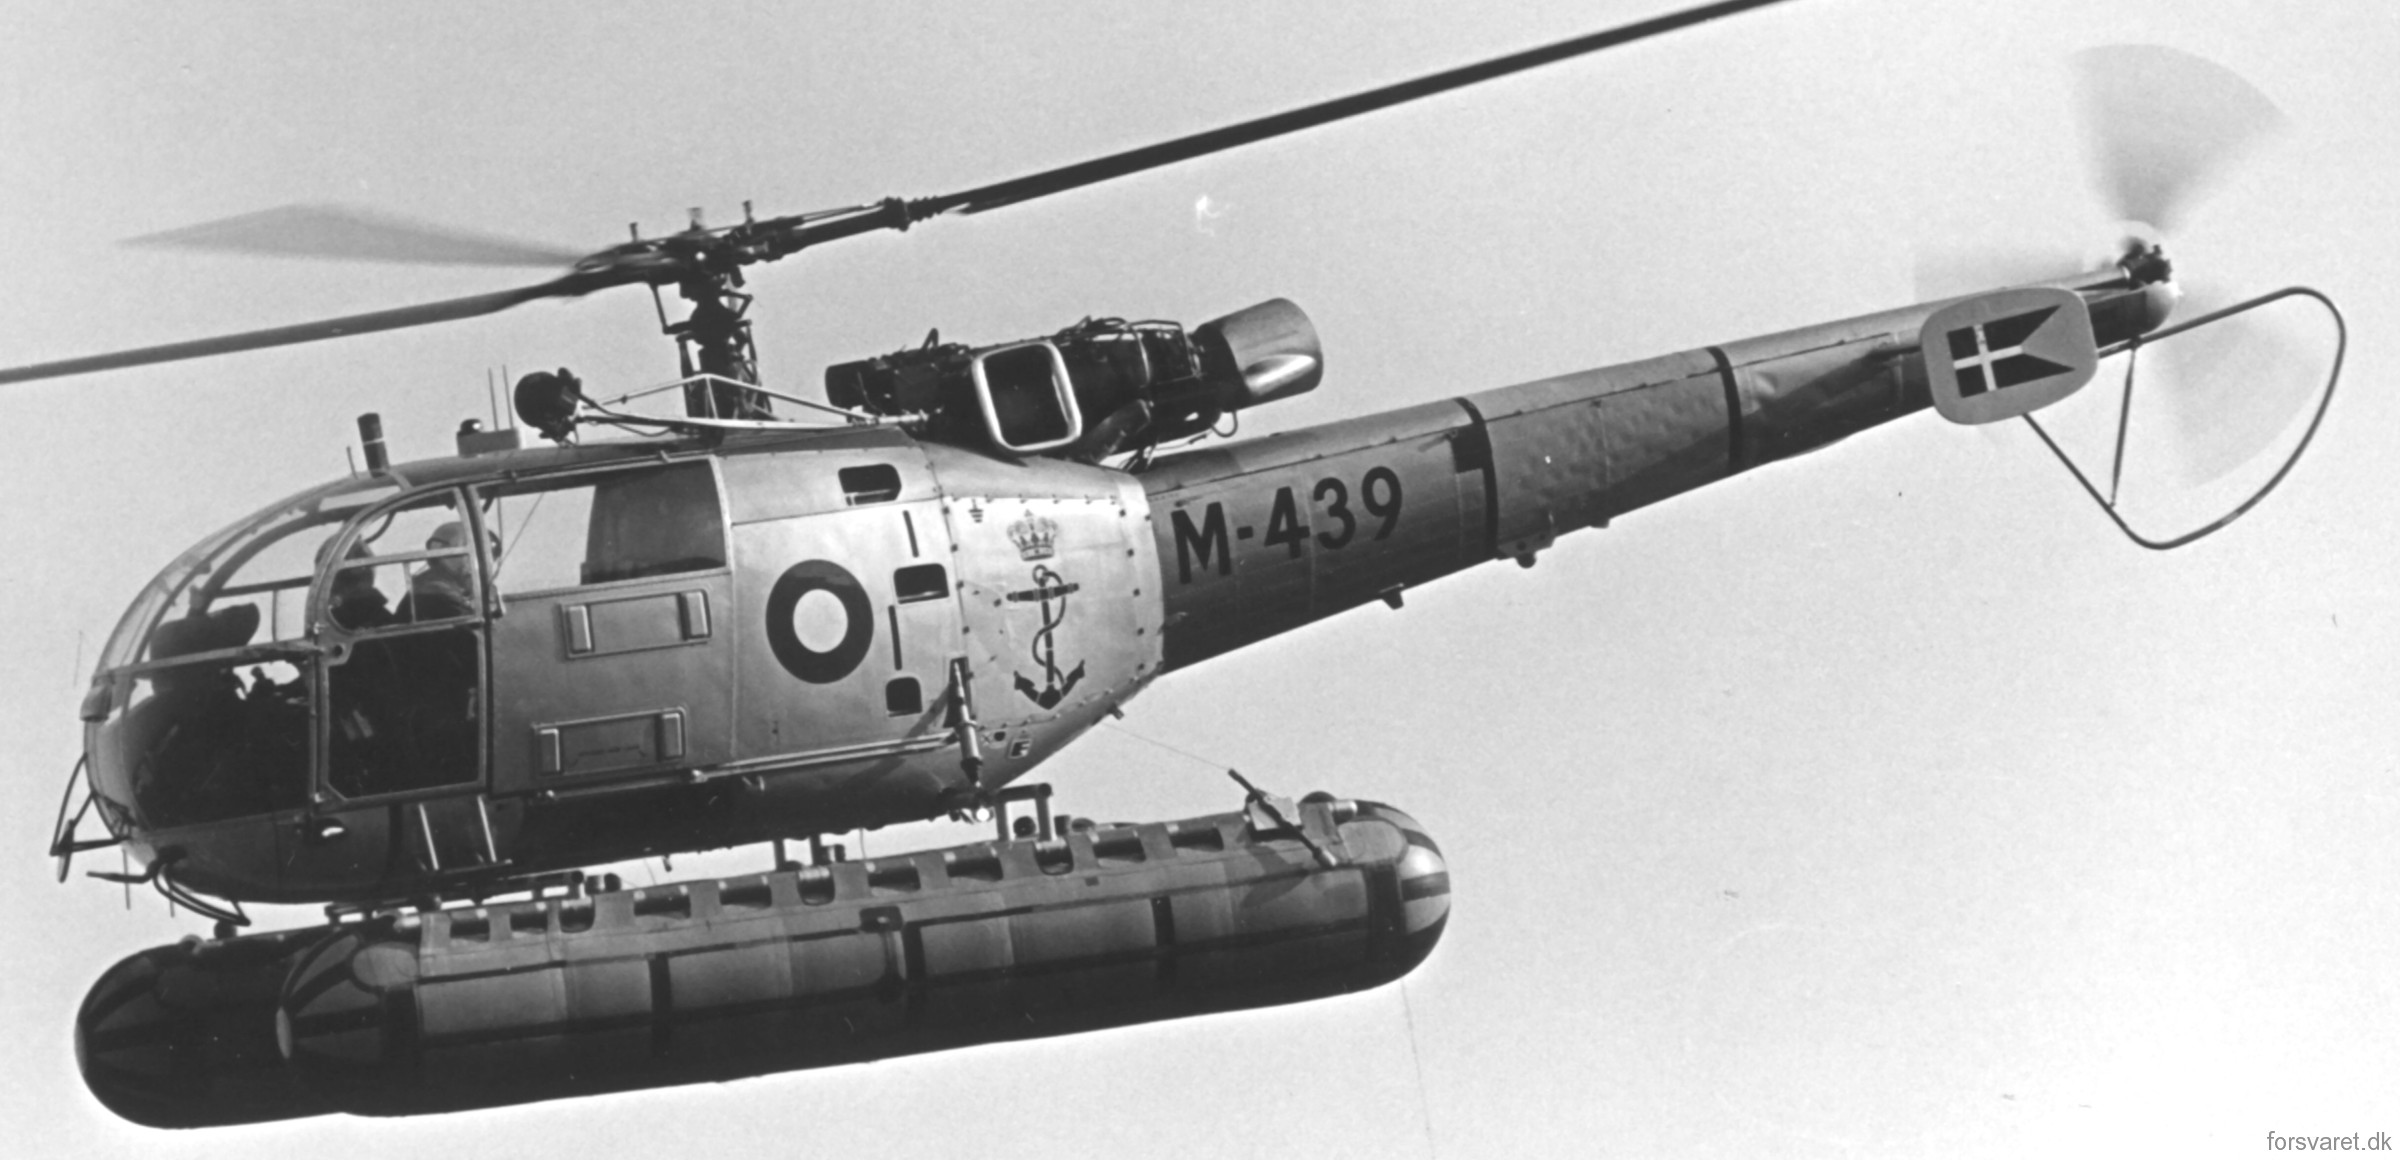 sa 316b alouette iii helicopter royal danish navy søværnet kongelige danske marine sud aviation m-439 07